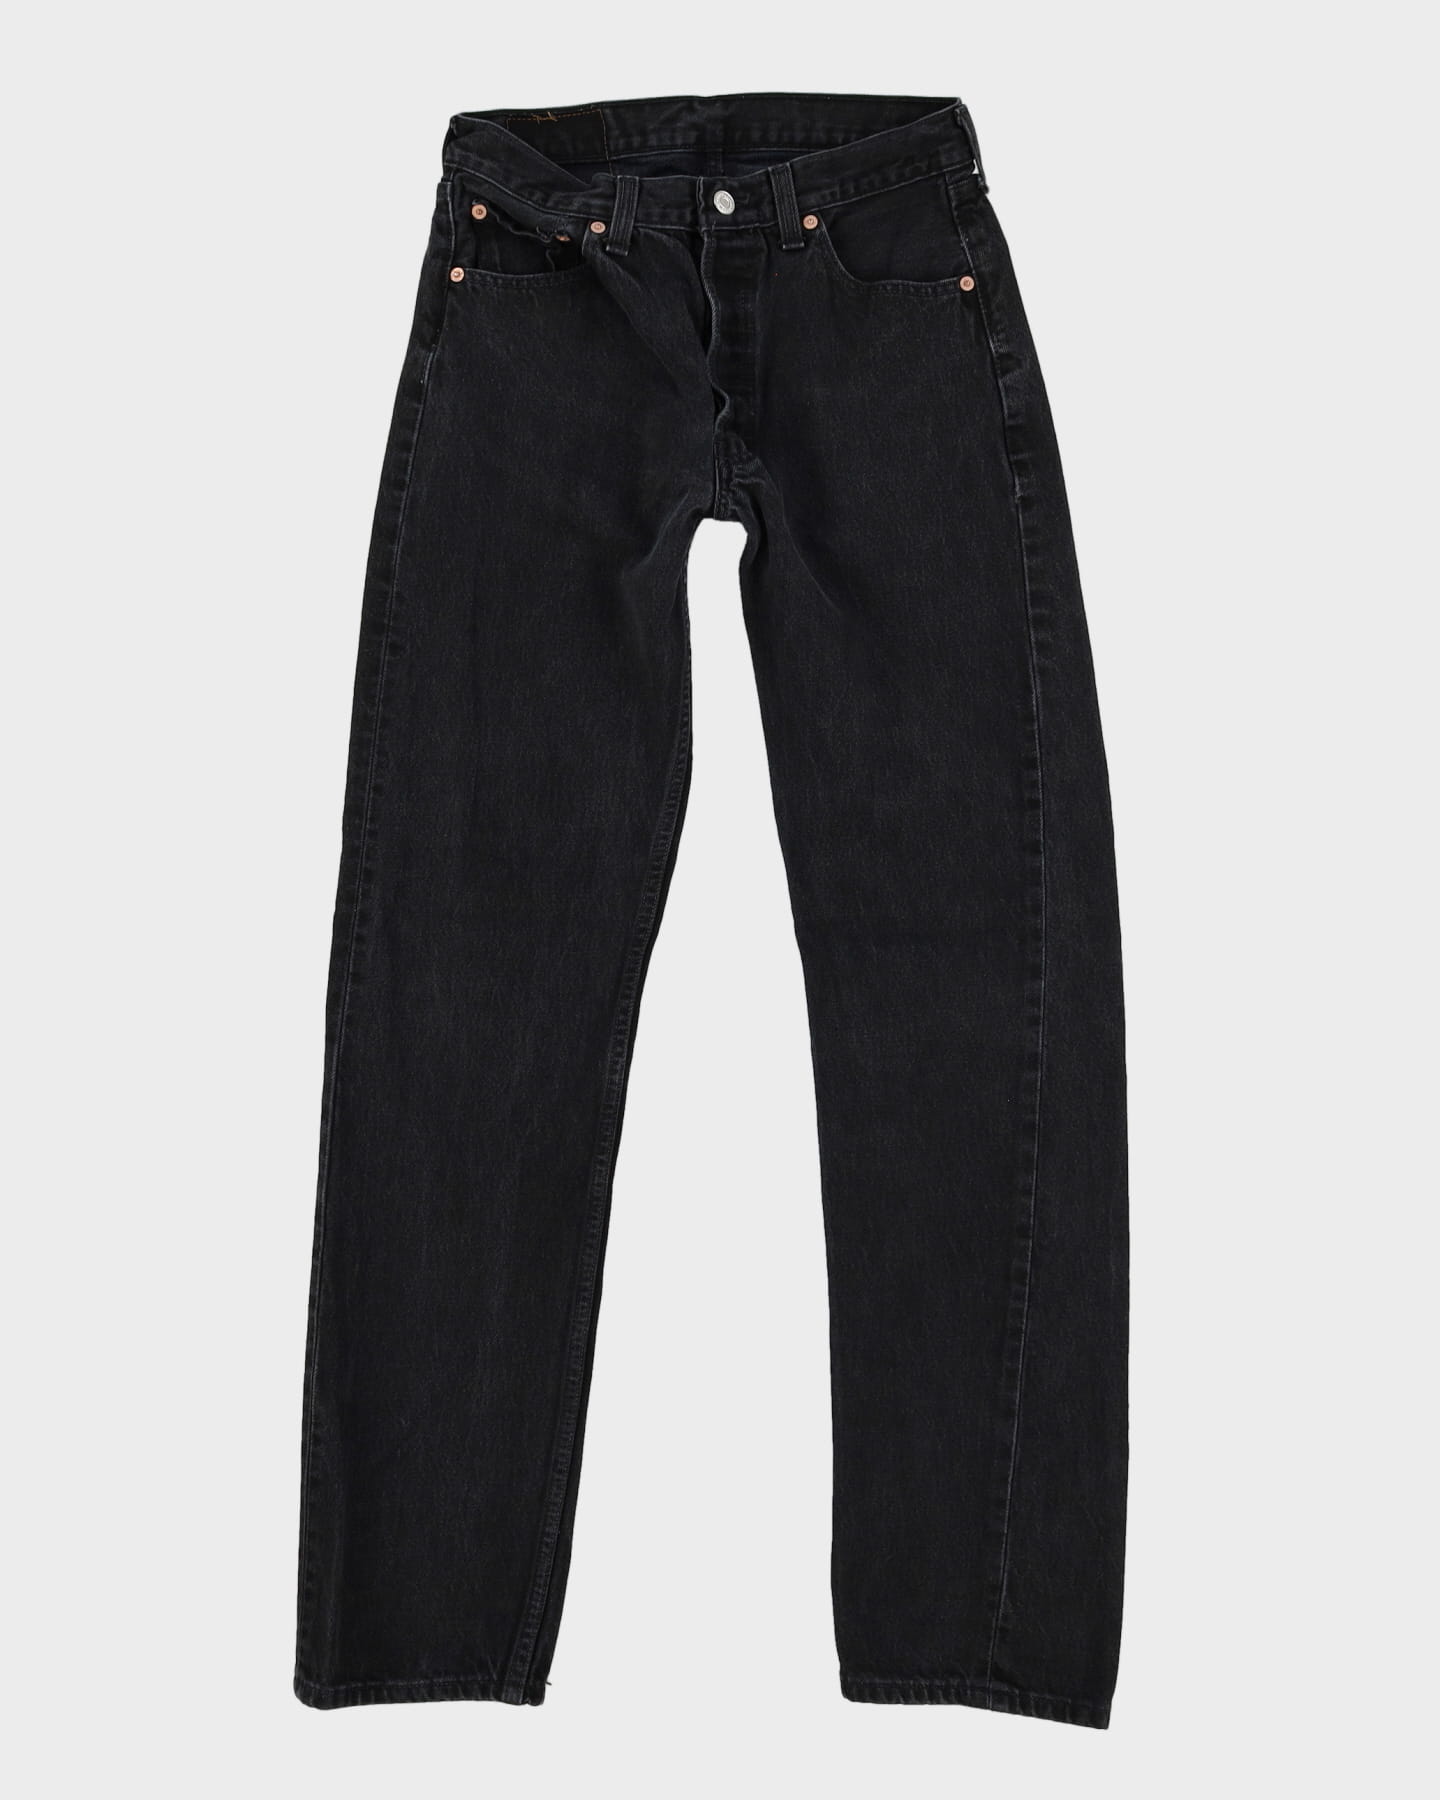 Vintage 90s Levi's 501 Black Dark Wash Jeans - W29 L33